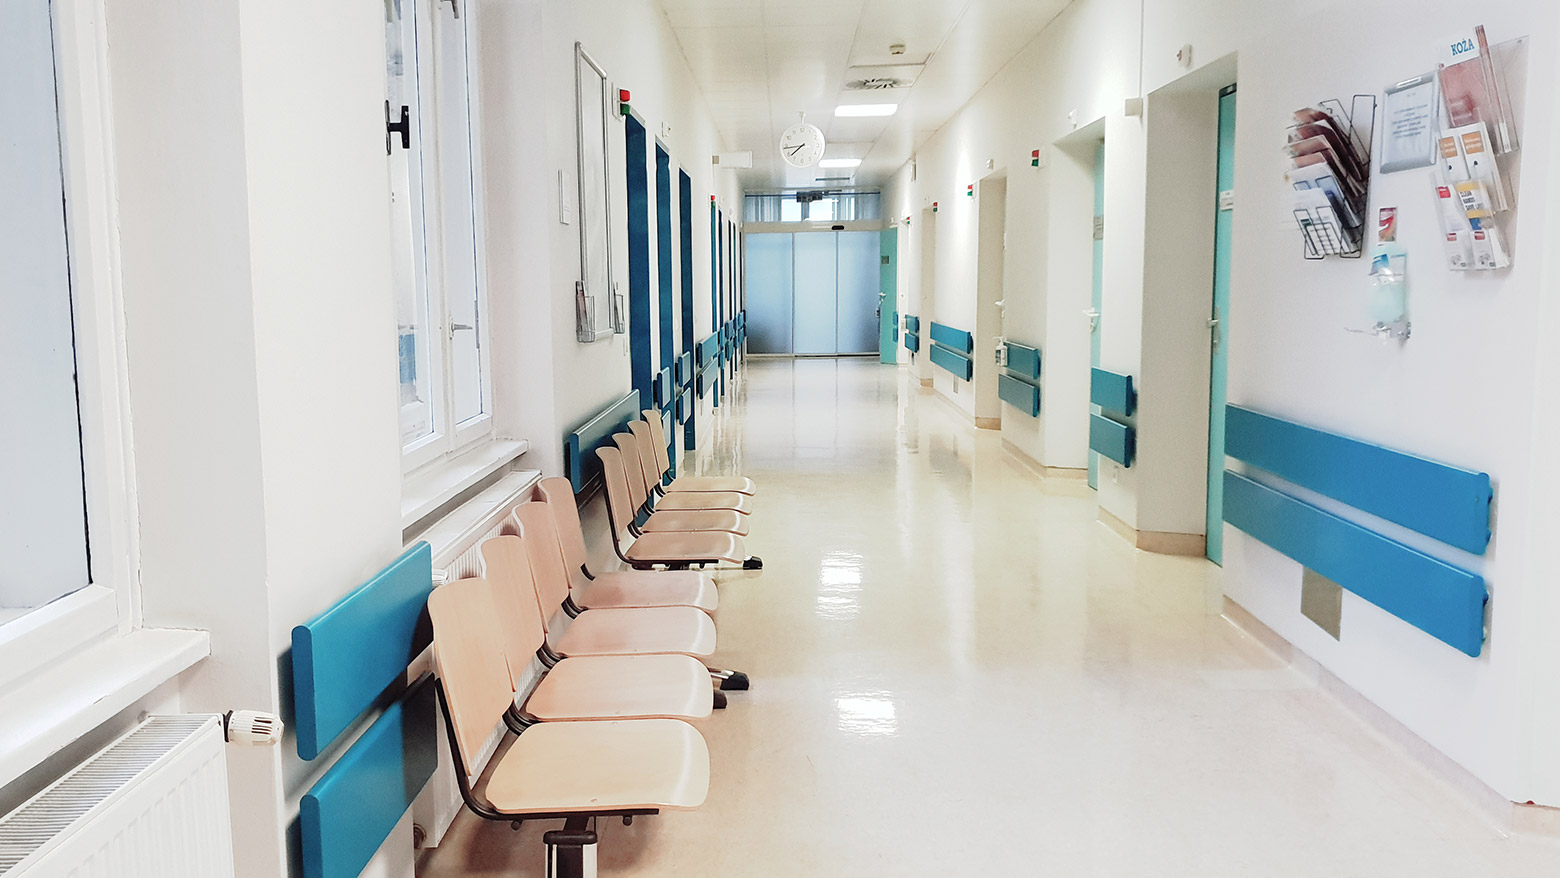 Doctor walks down the hallway of a hospital